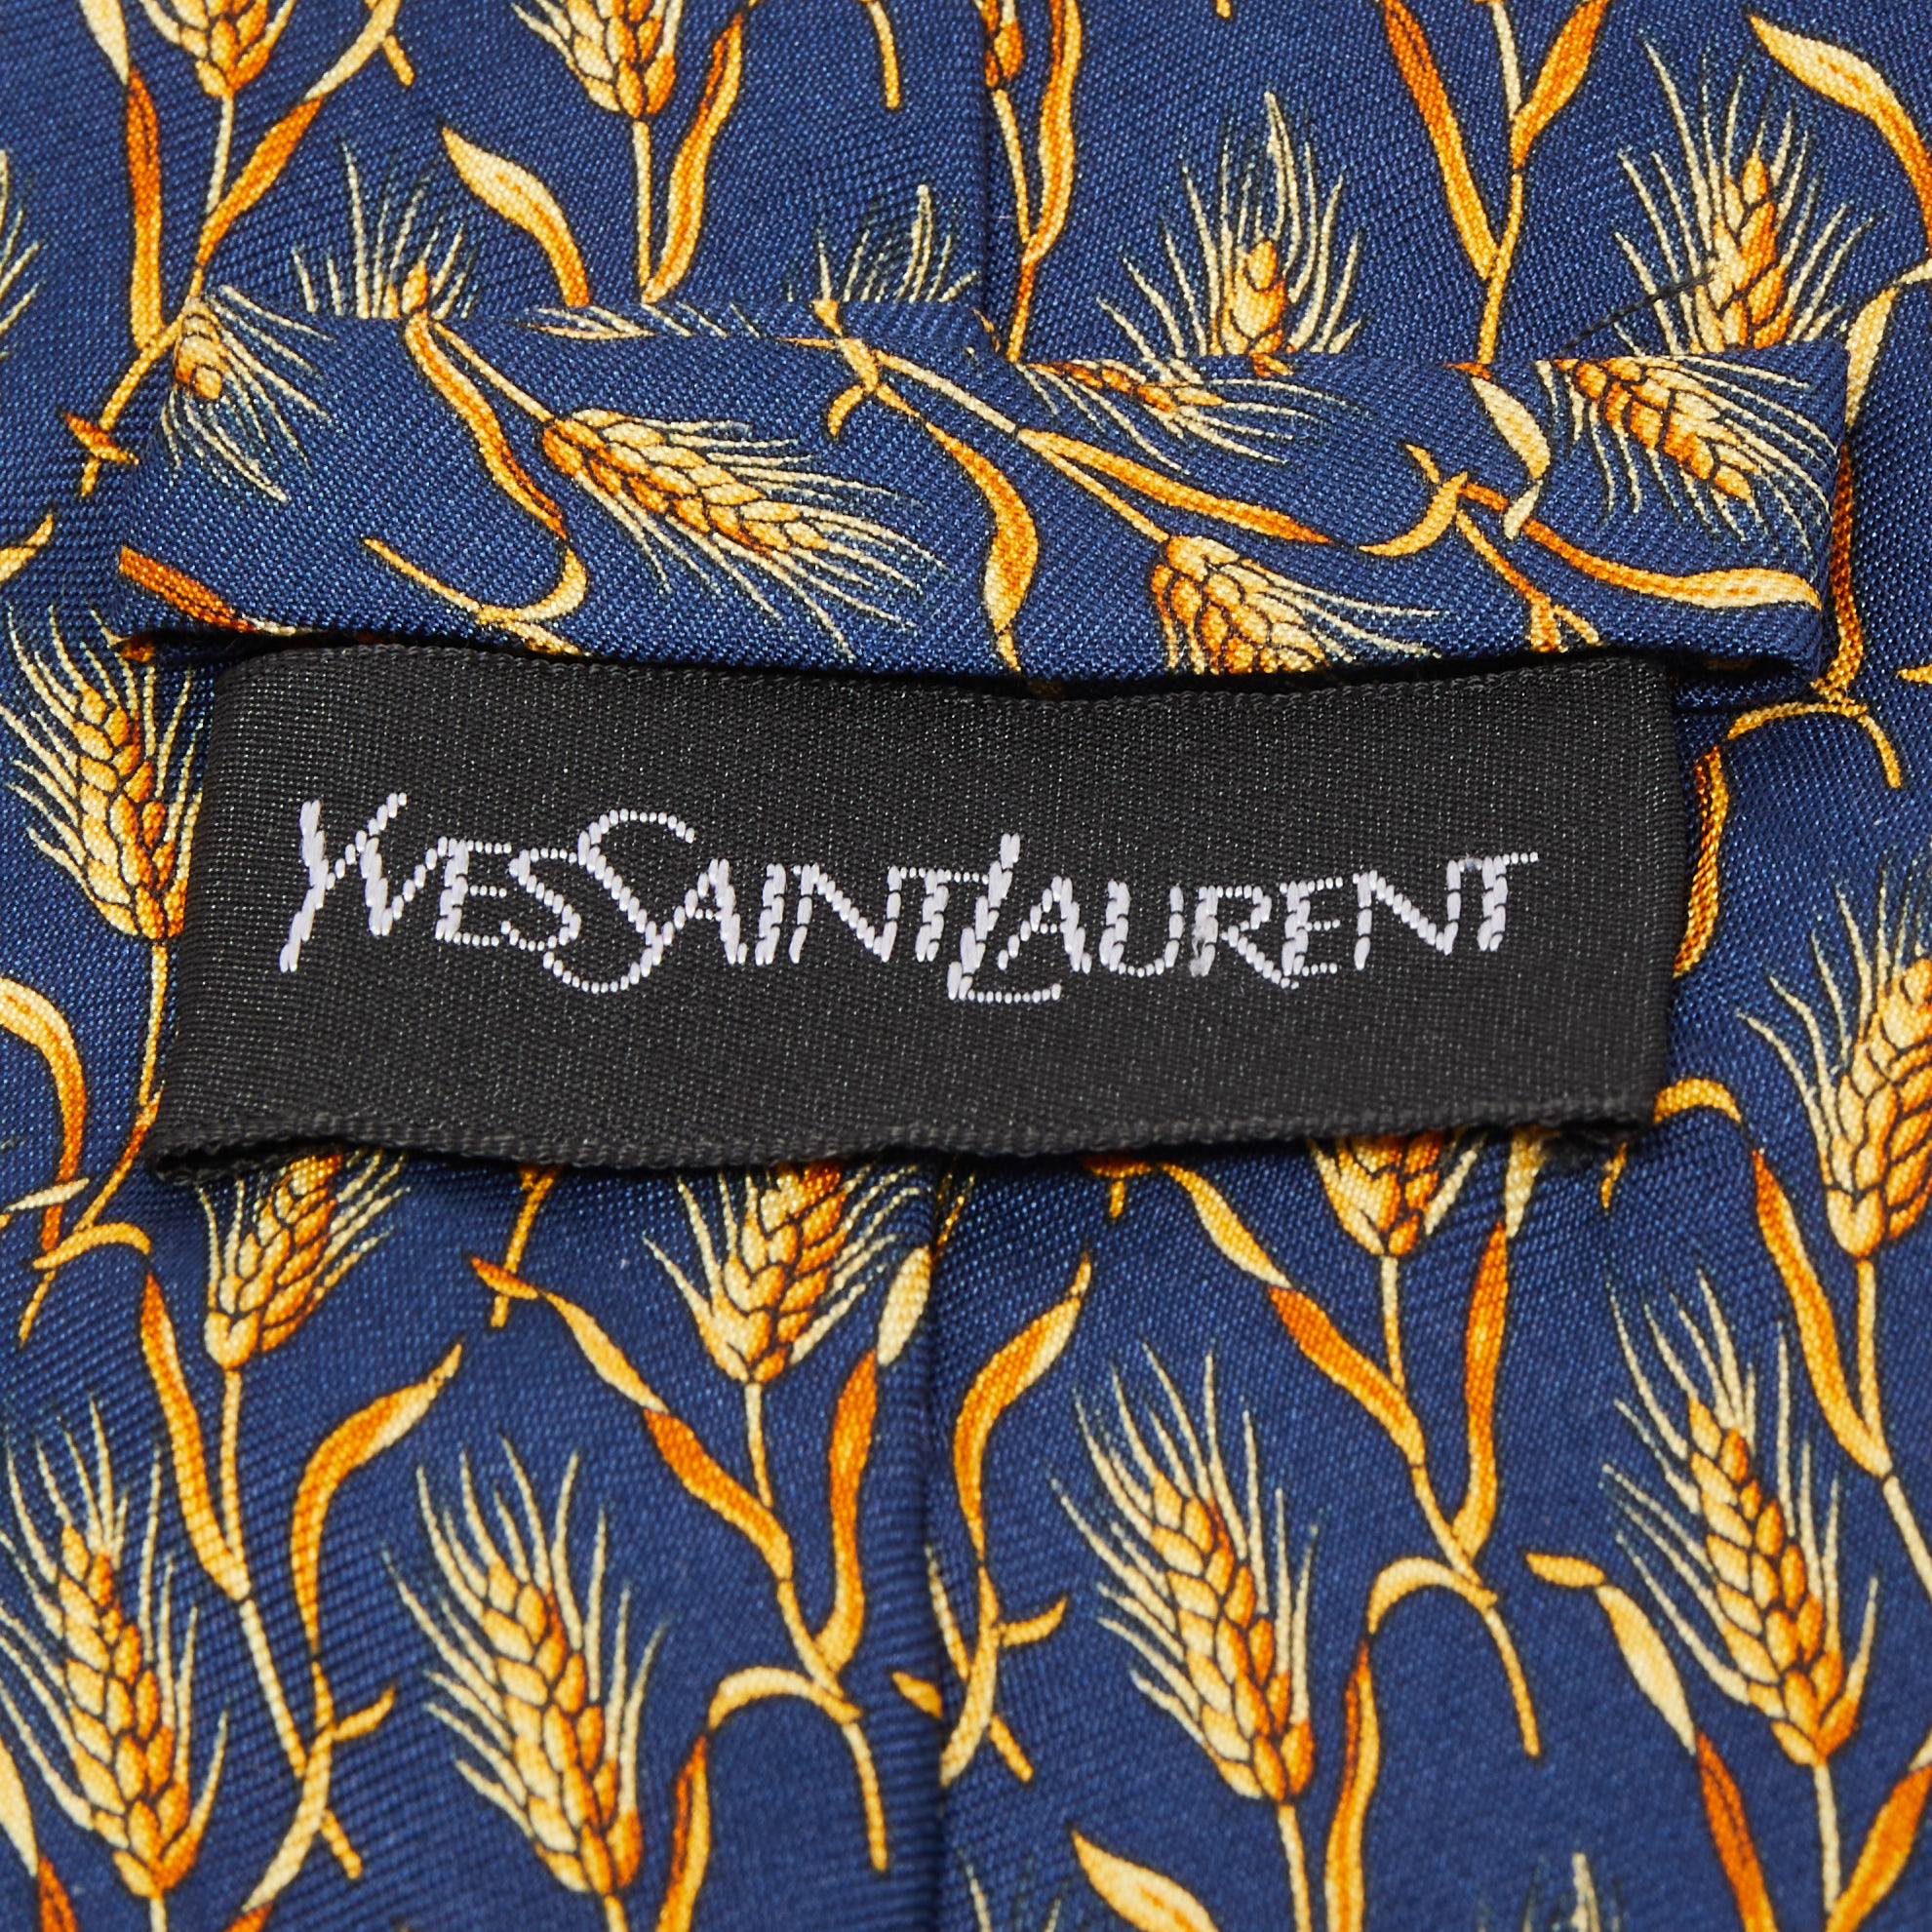 Yves Saint Laurent Paris Navy Blue Wheat Print Silk Tie